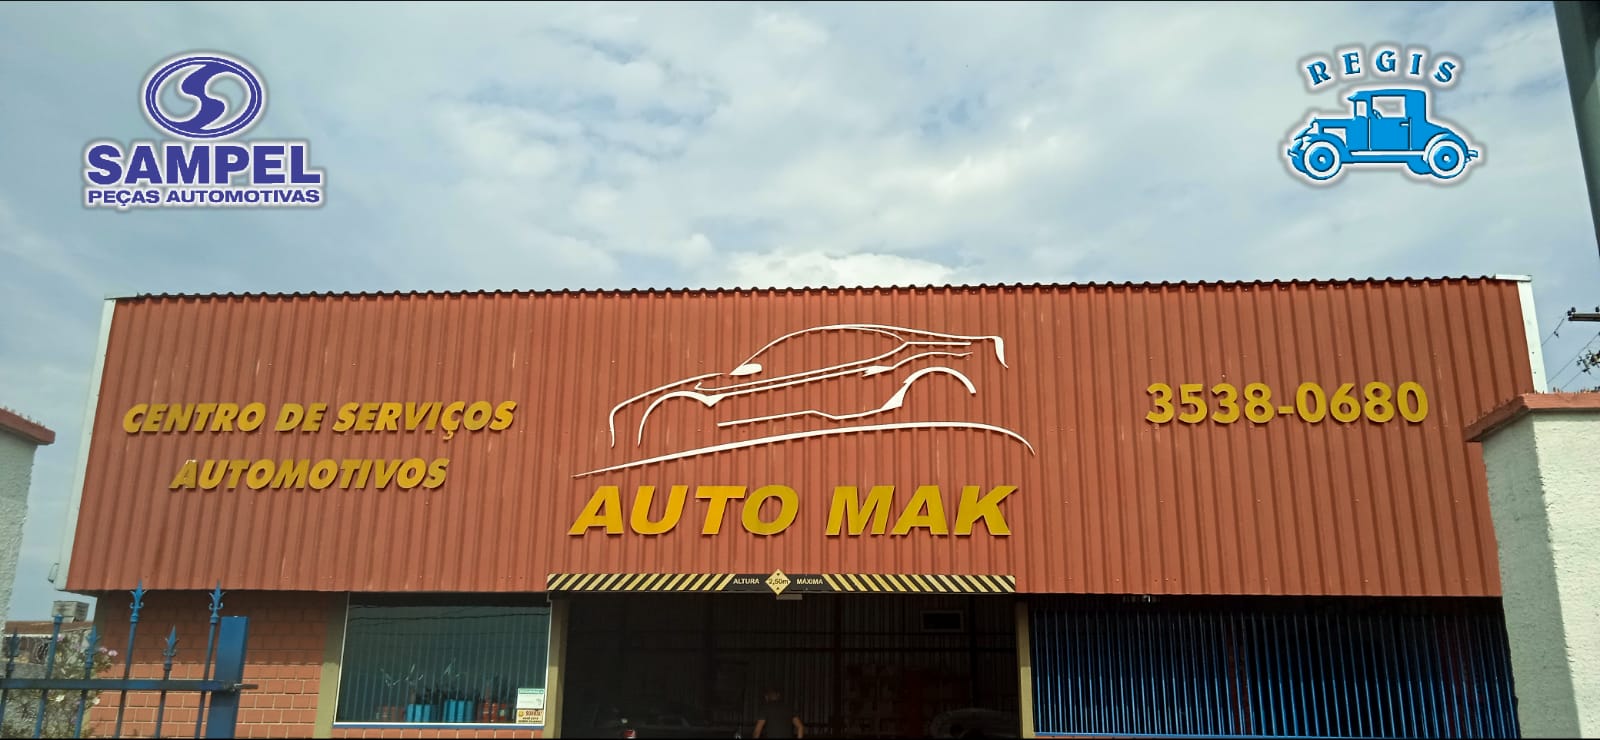 Visita ao Auto Center Auto Mak